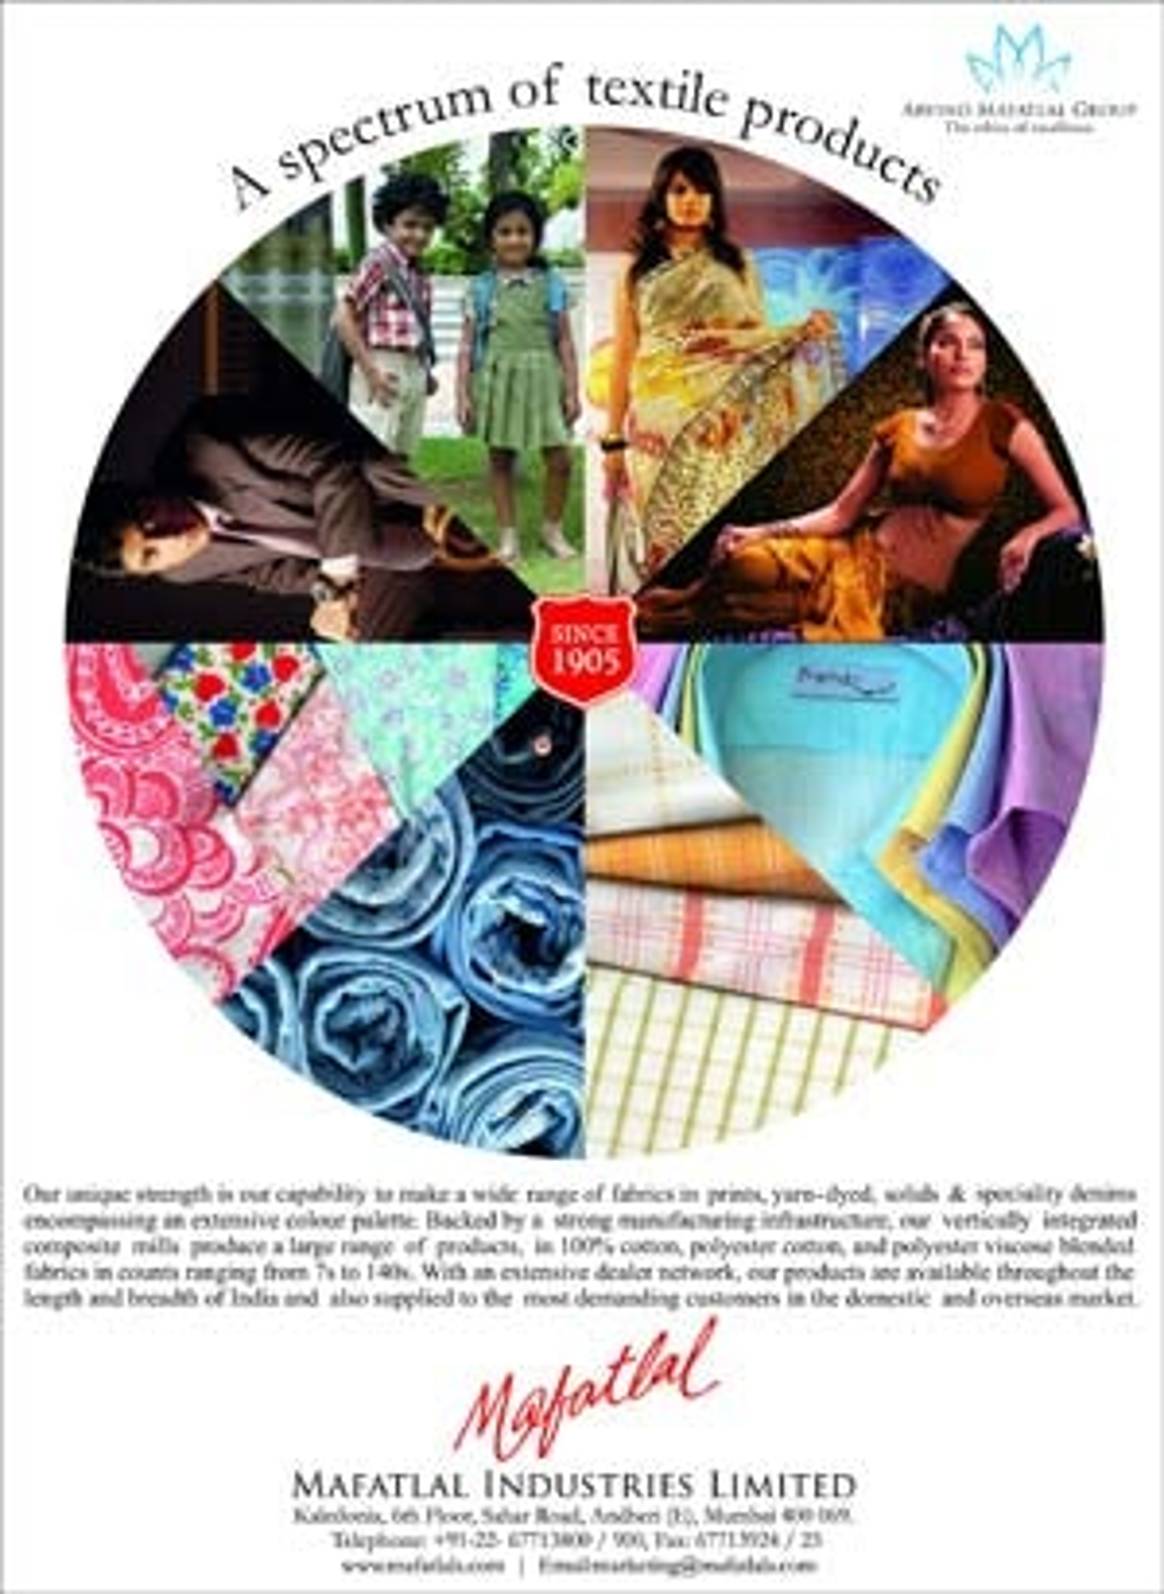 Mafatlal consolidates its textile business